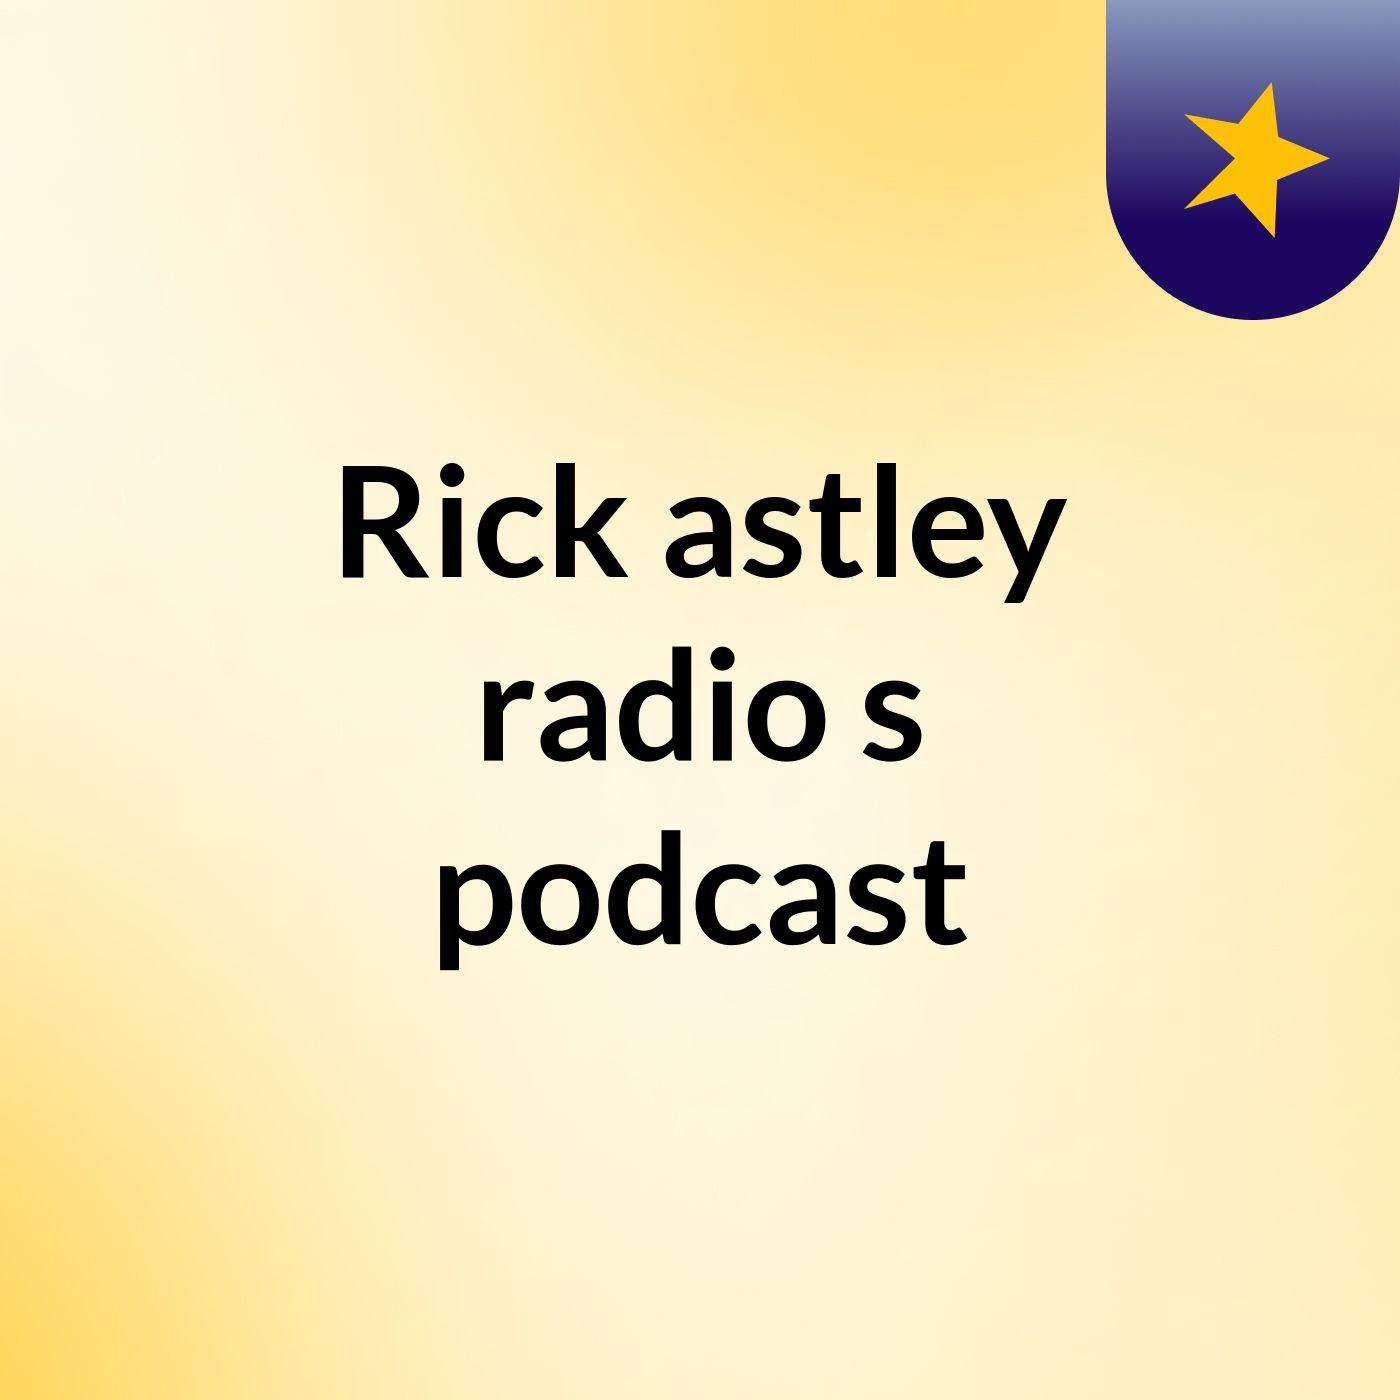 Episode 2 - Rick astley radio's podcast